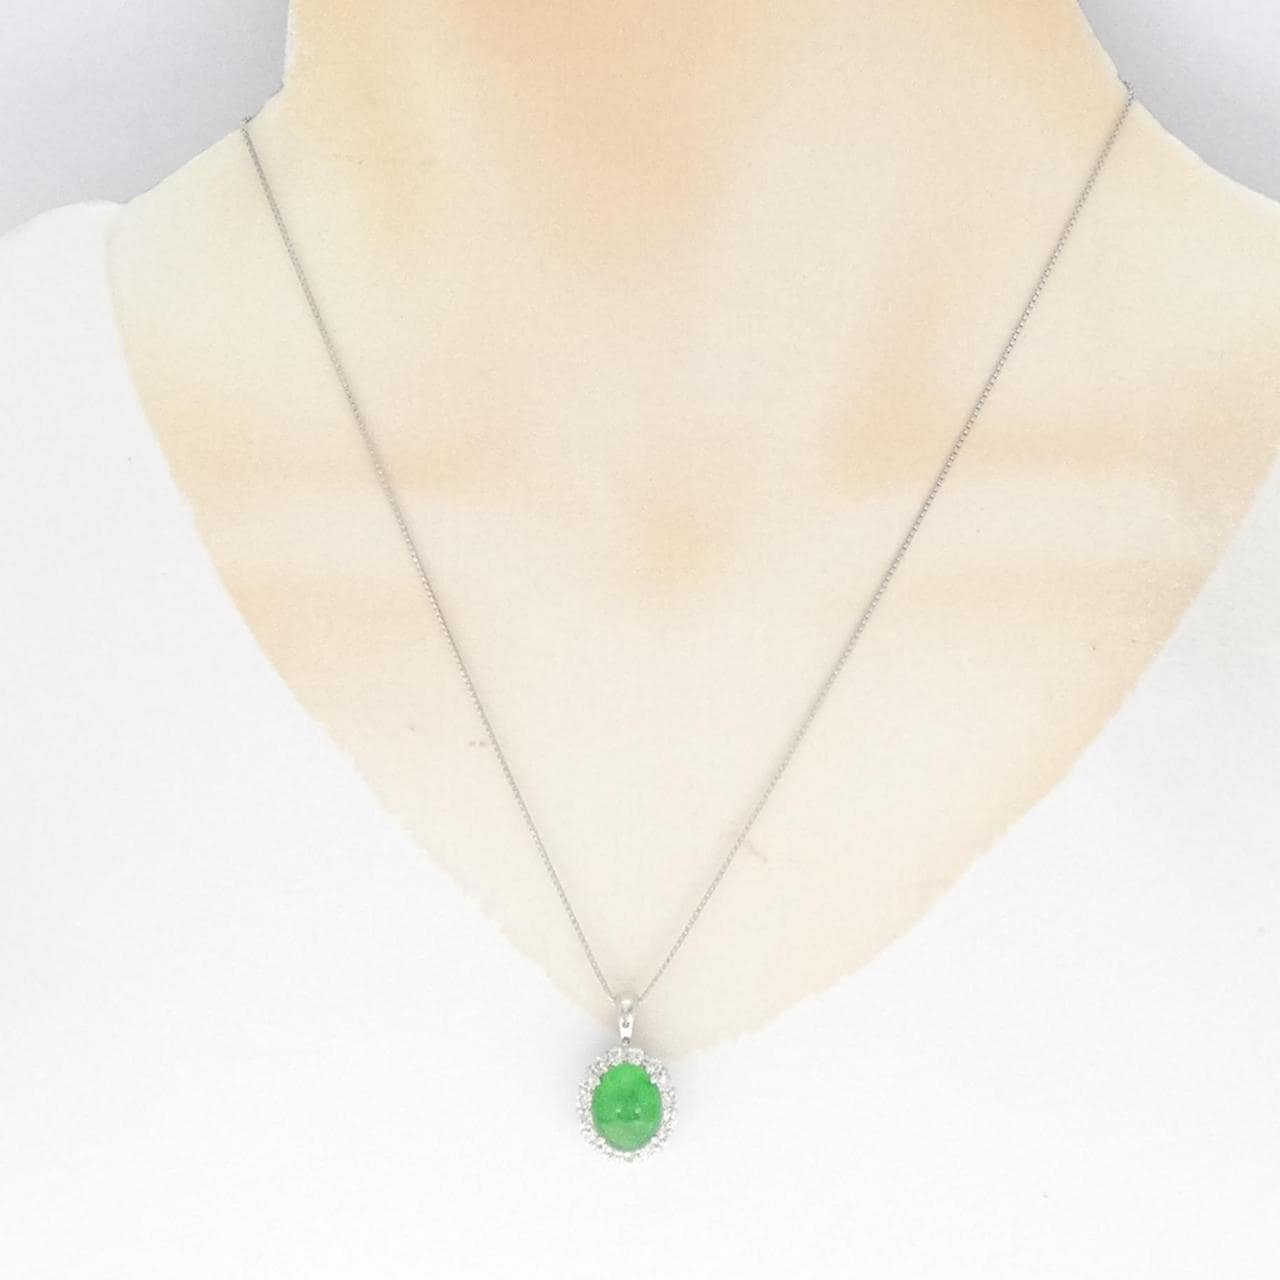 [Remake] PT jade necklace 4.49CT